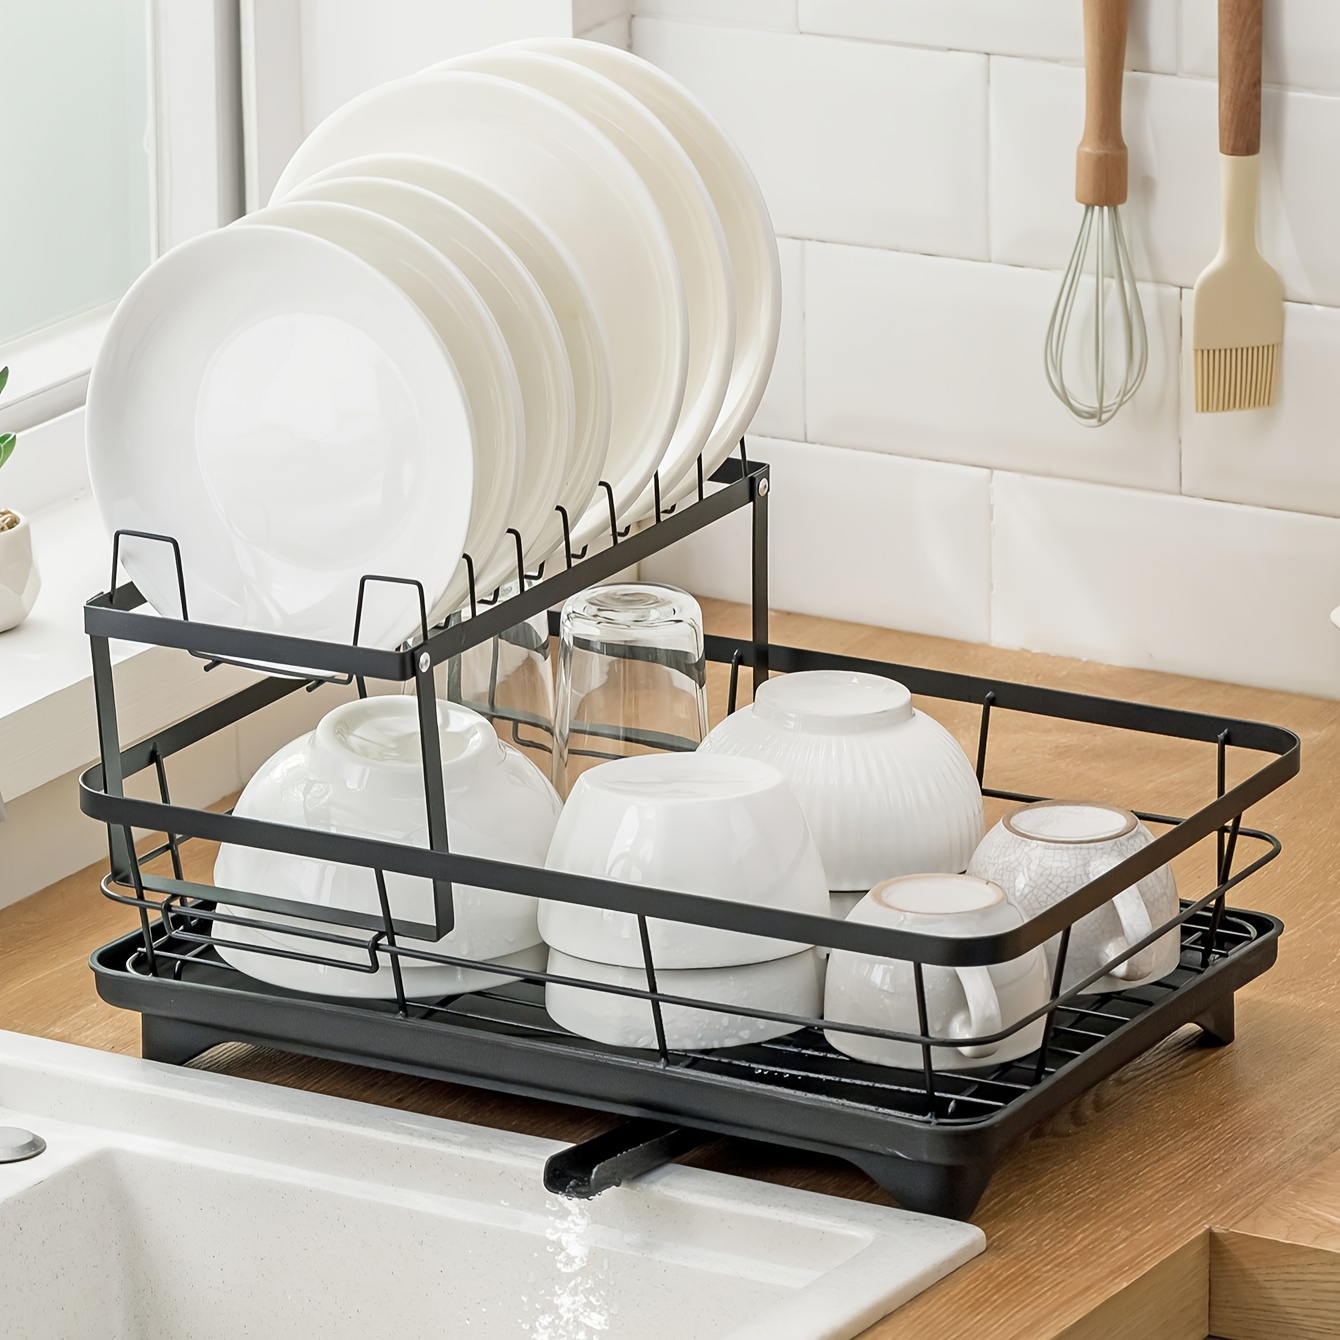 Dish Drying Rack- Space-Saving Dish Racks for Kitchen Counter